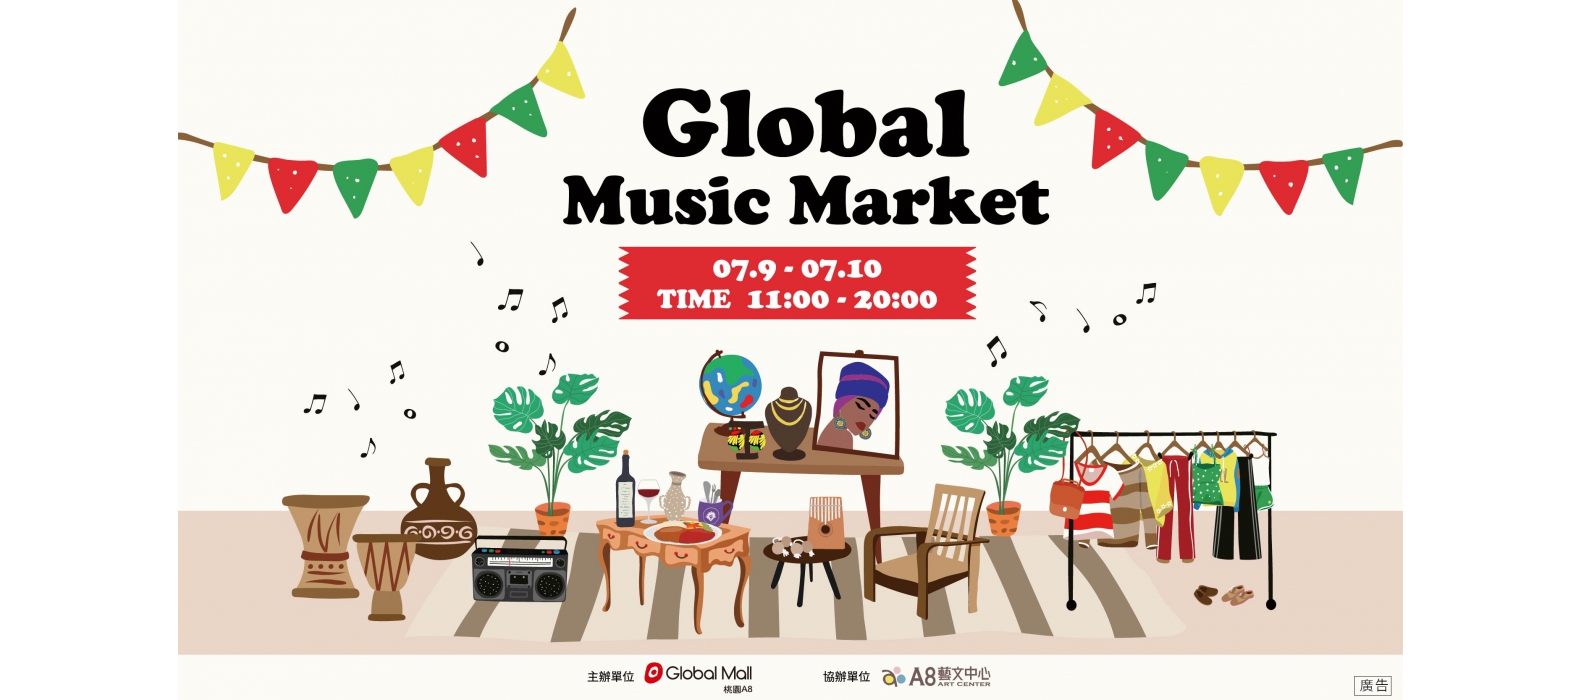 A8 Global Music Market